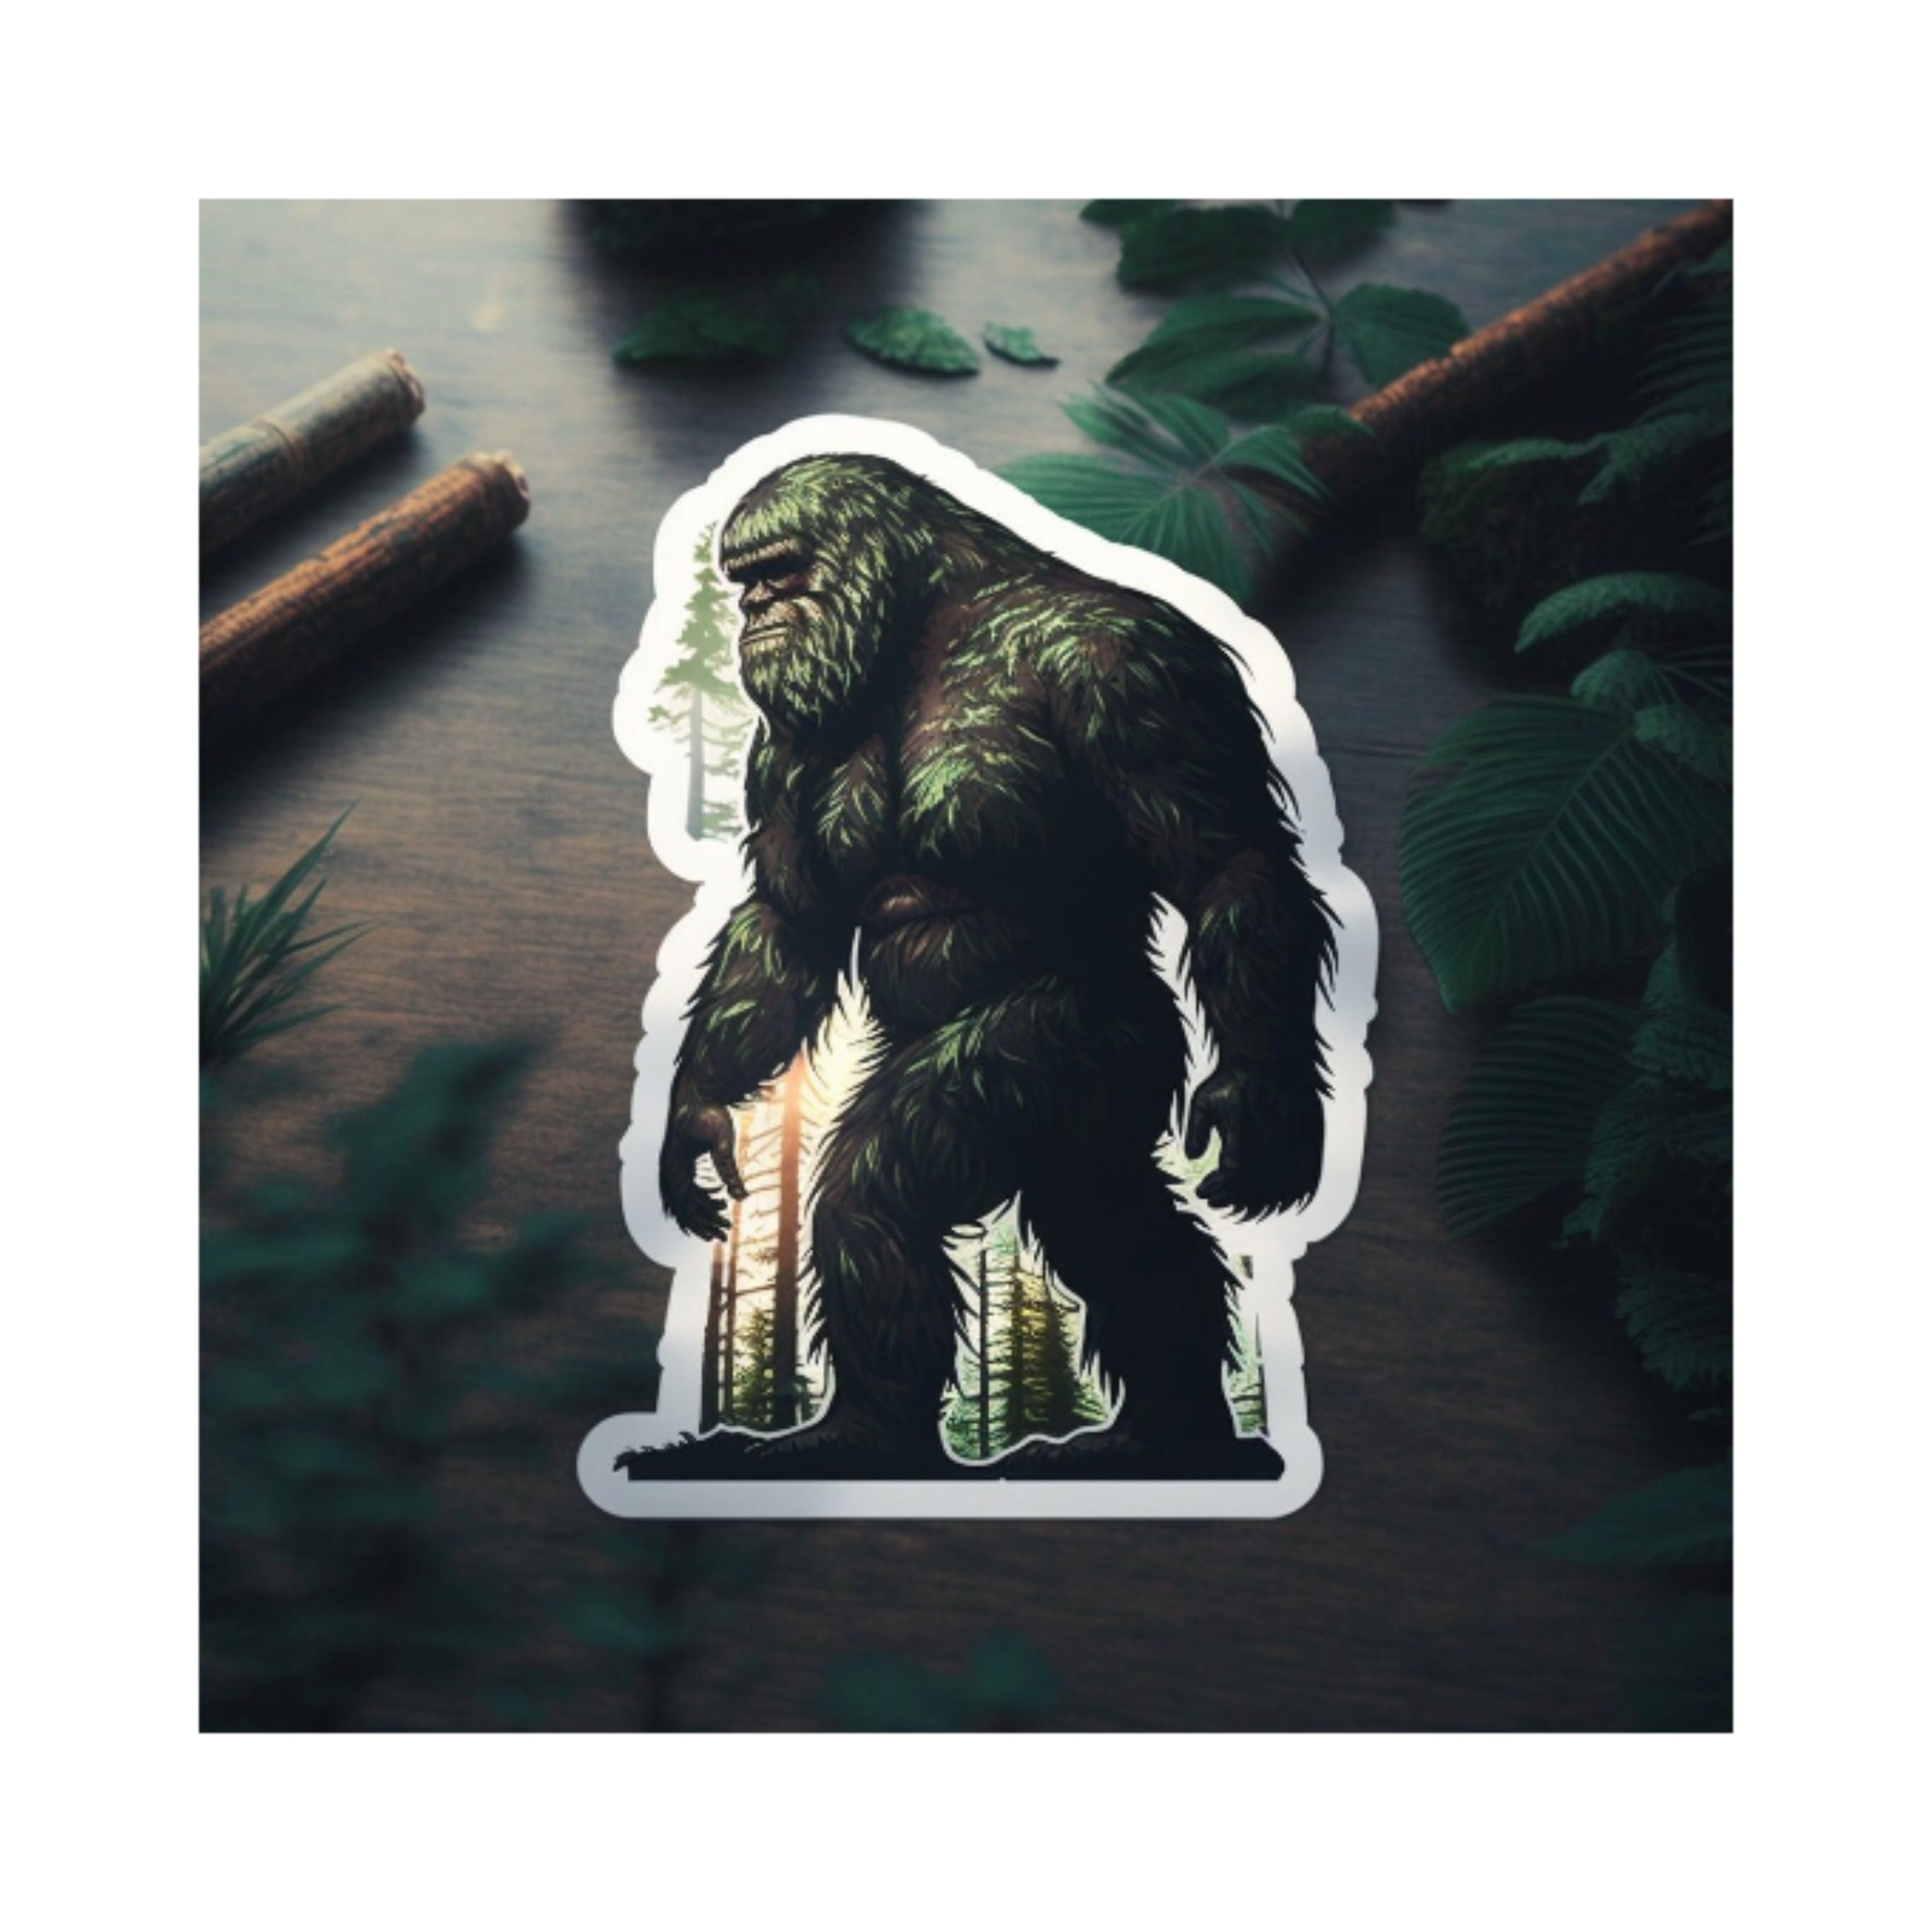 Bigfoot in the Forest Sticker, Car Truck Window Bumper Vinyl Graphics  Sticker Decal, Waterproof UV Resistant Decal, Sasquatch Myth Legend 